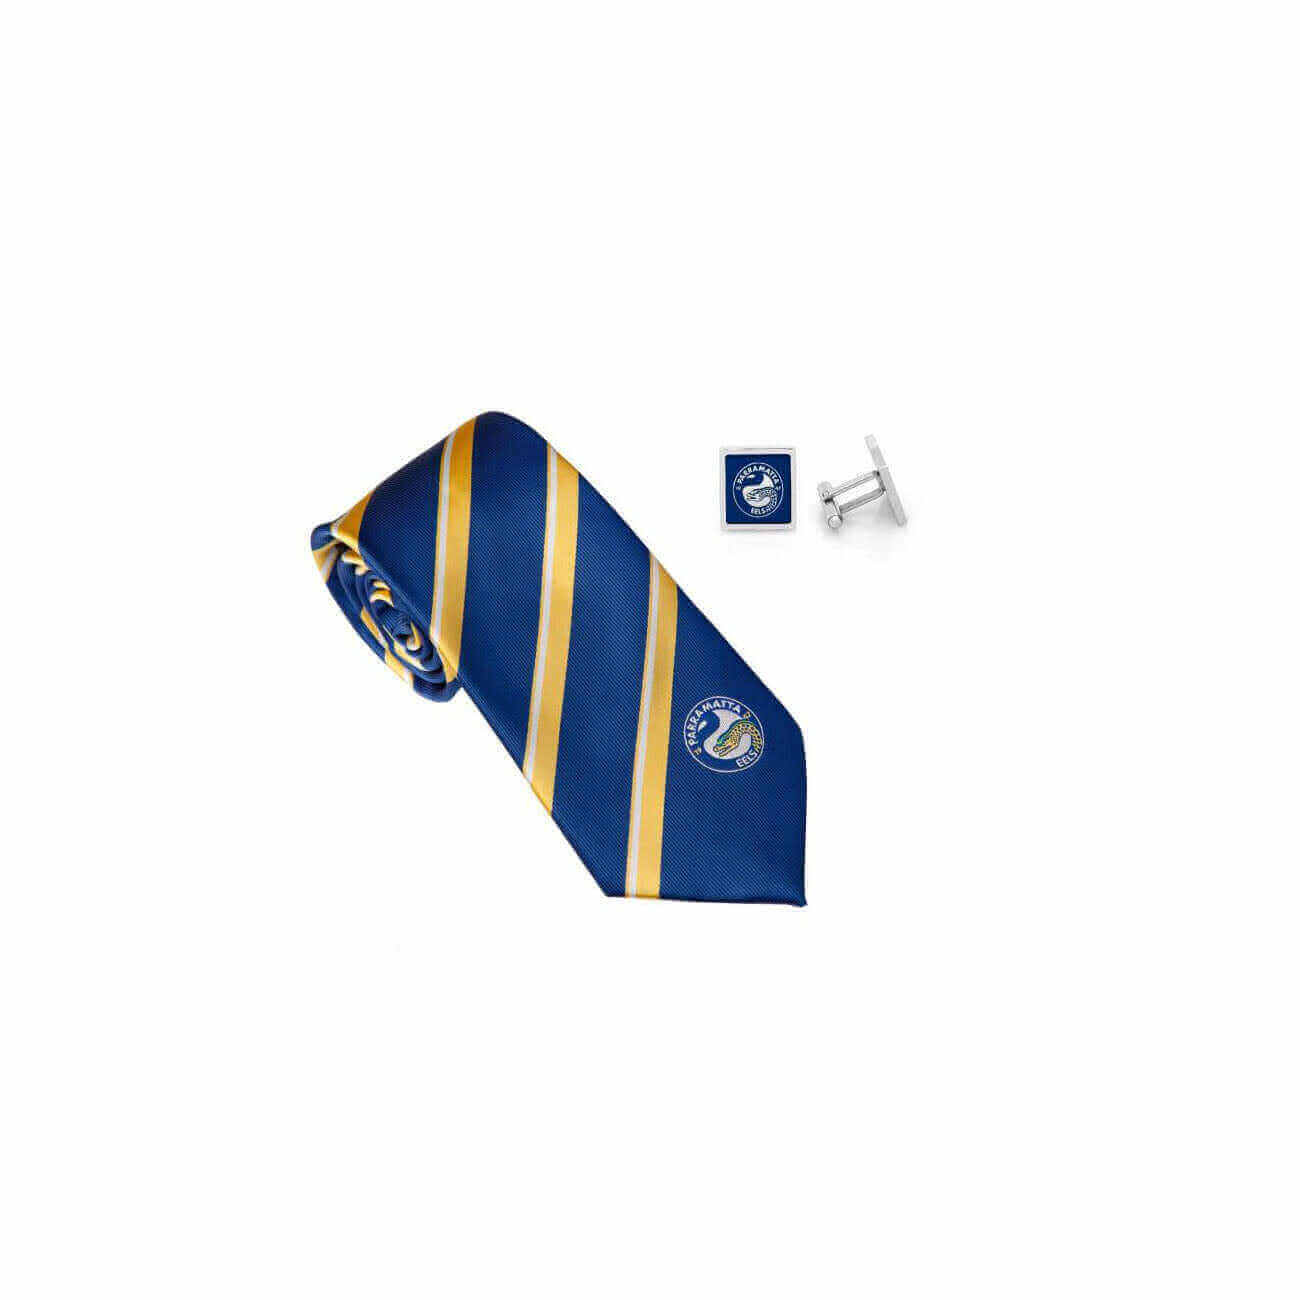 NRL Tie And Cufflinks Set